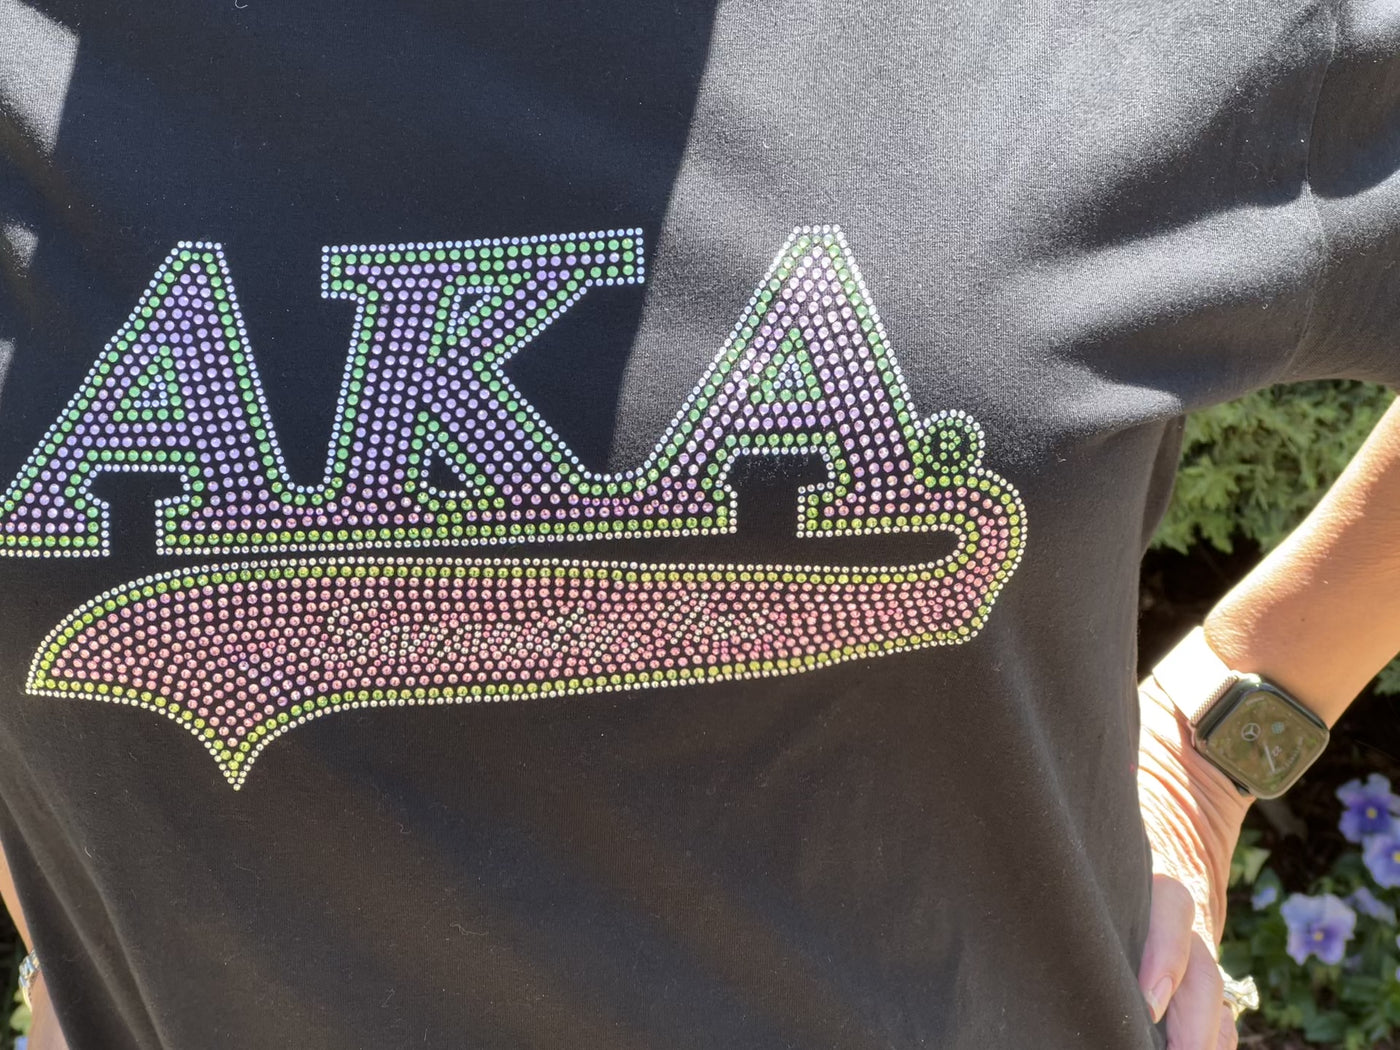 Alpha Kappa Alpha Tail Rhinestone Bling T-Shirt